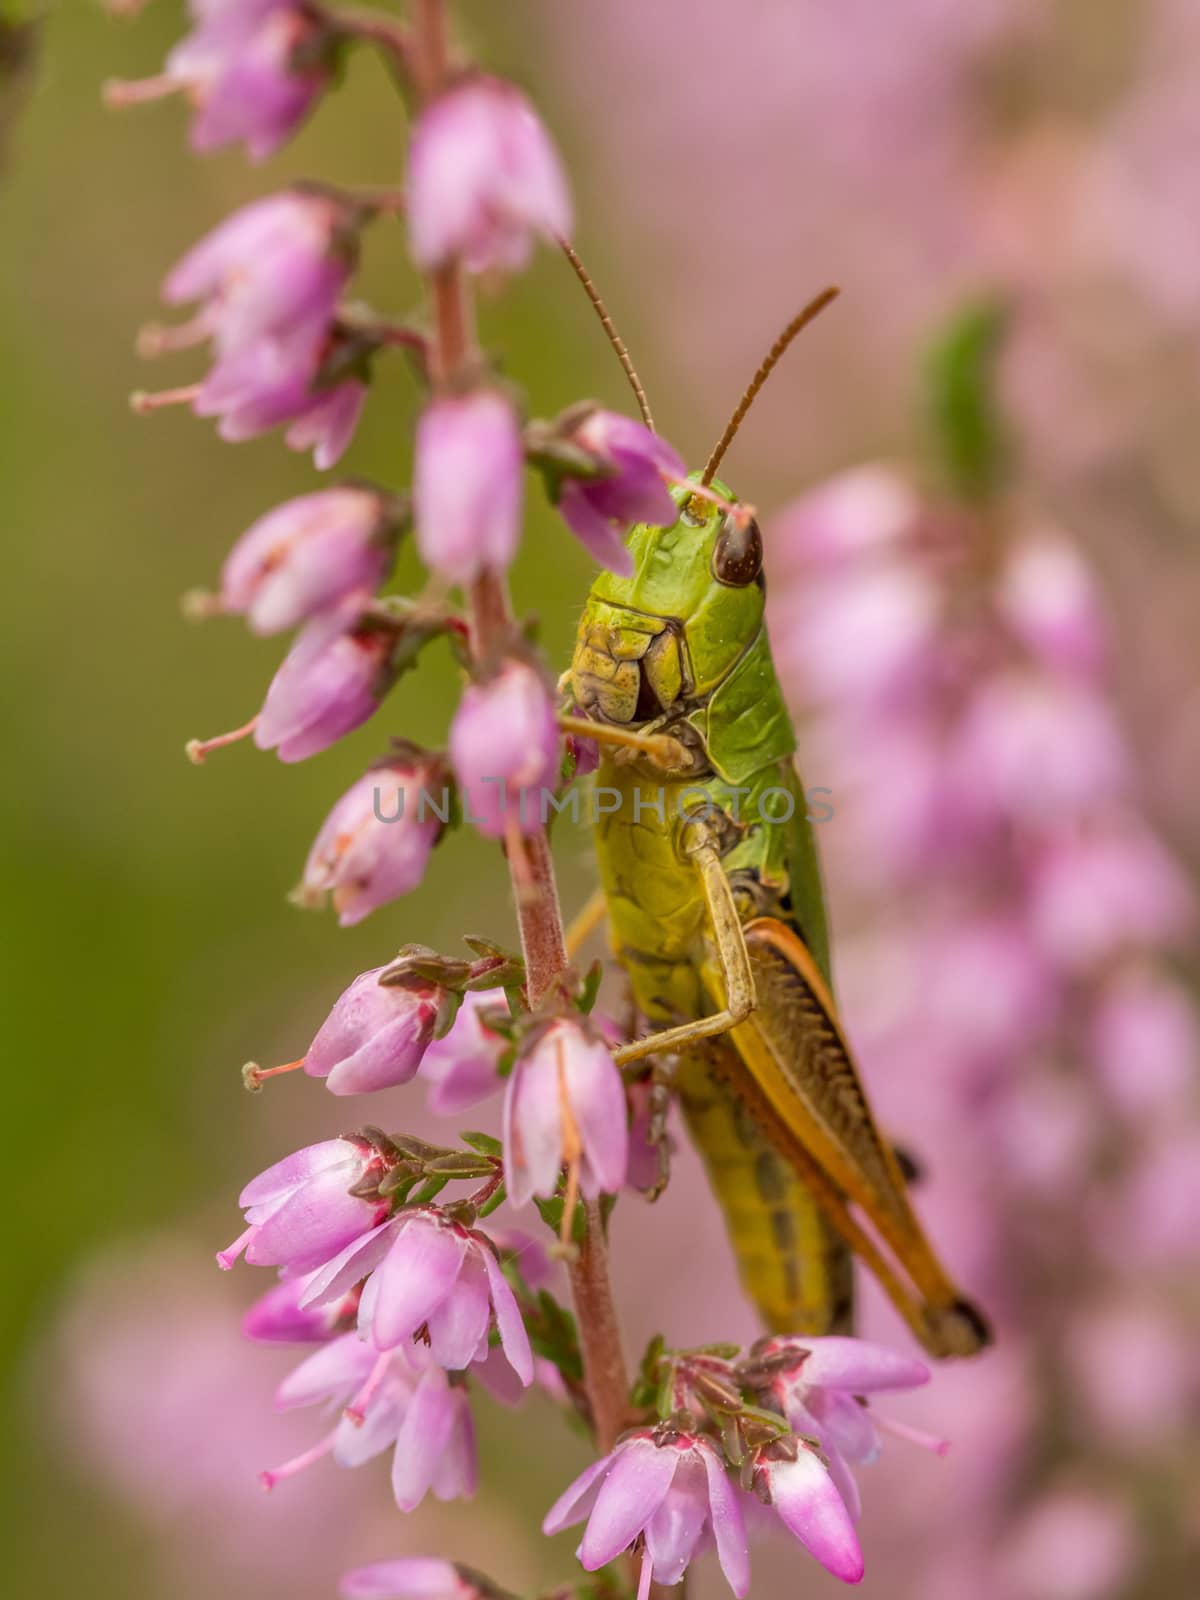 Grasshopper resting in field of heather